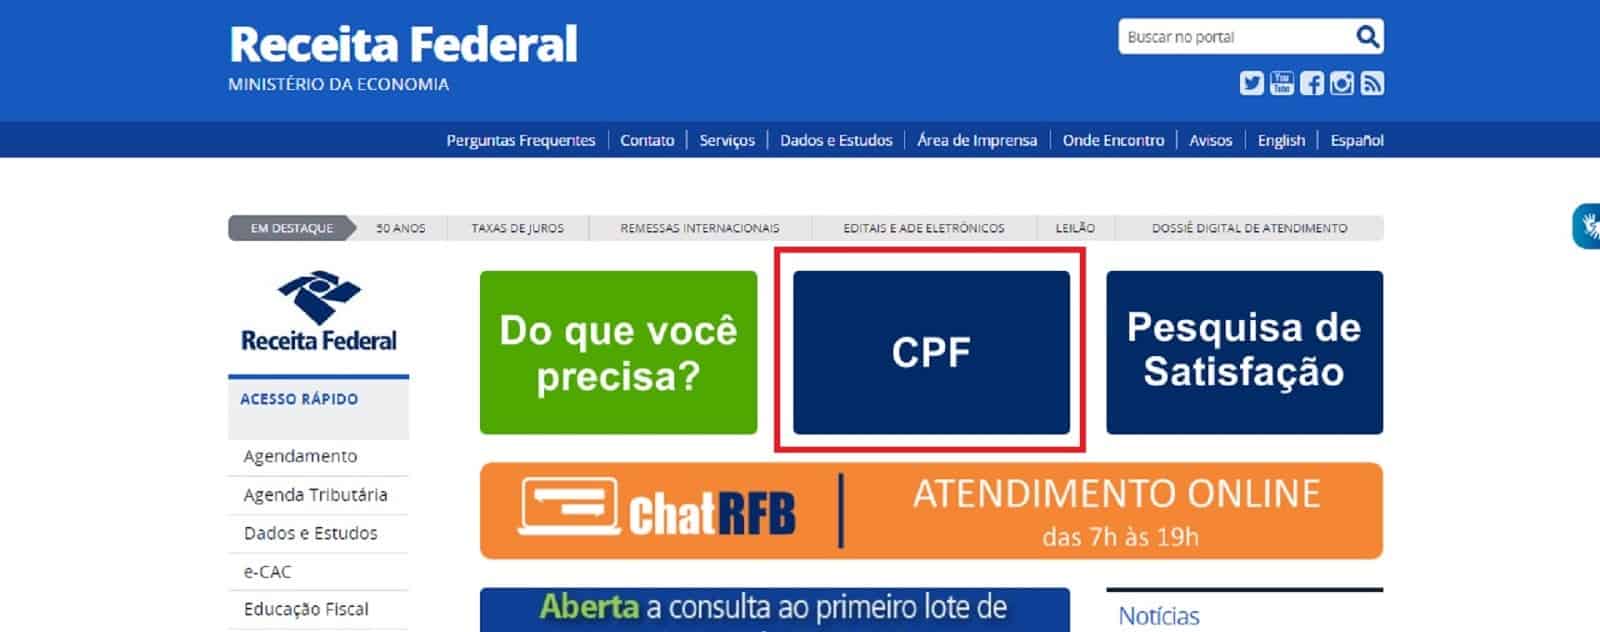 site-da-receita-federal-para-consultar-cpf